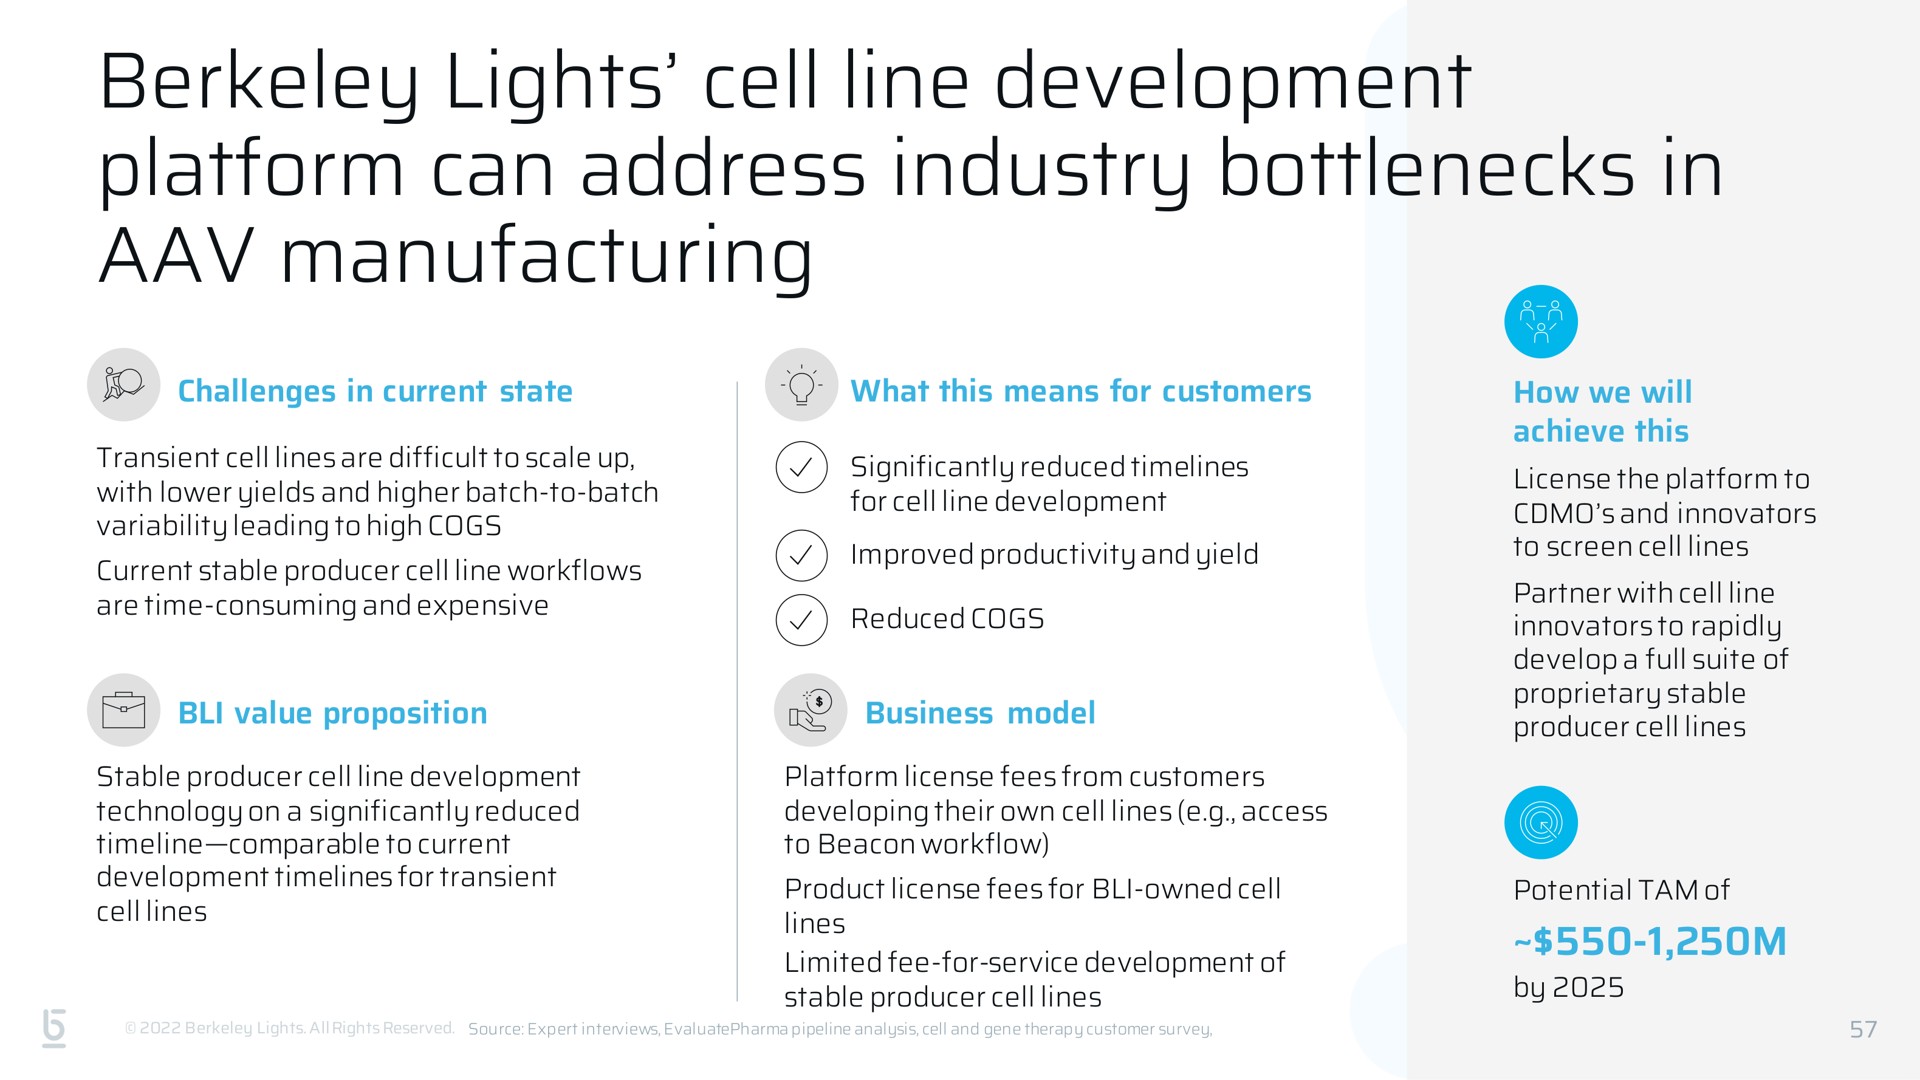 lights cell line development platform can address industry bottlenecks in manufacturing | Berkeley Lights